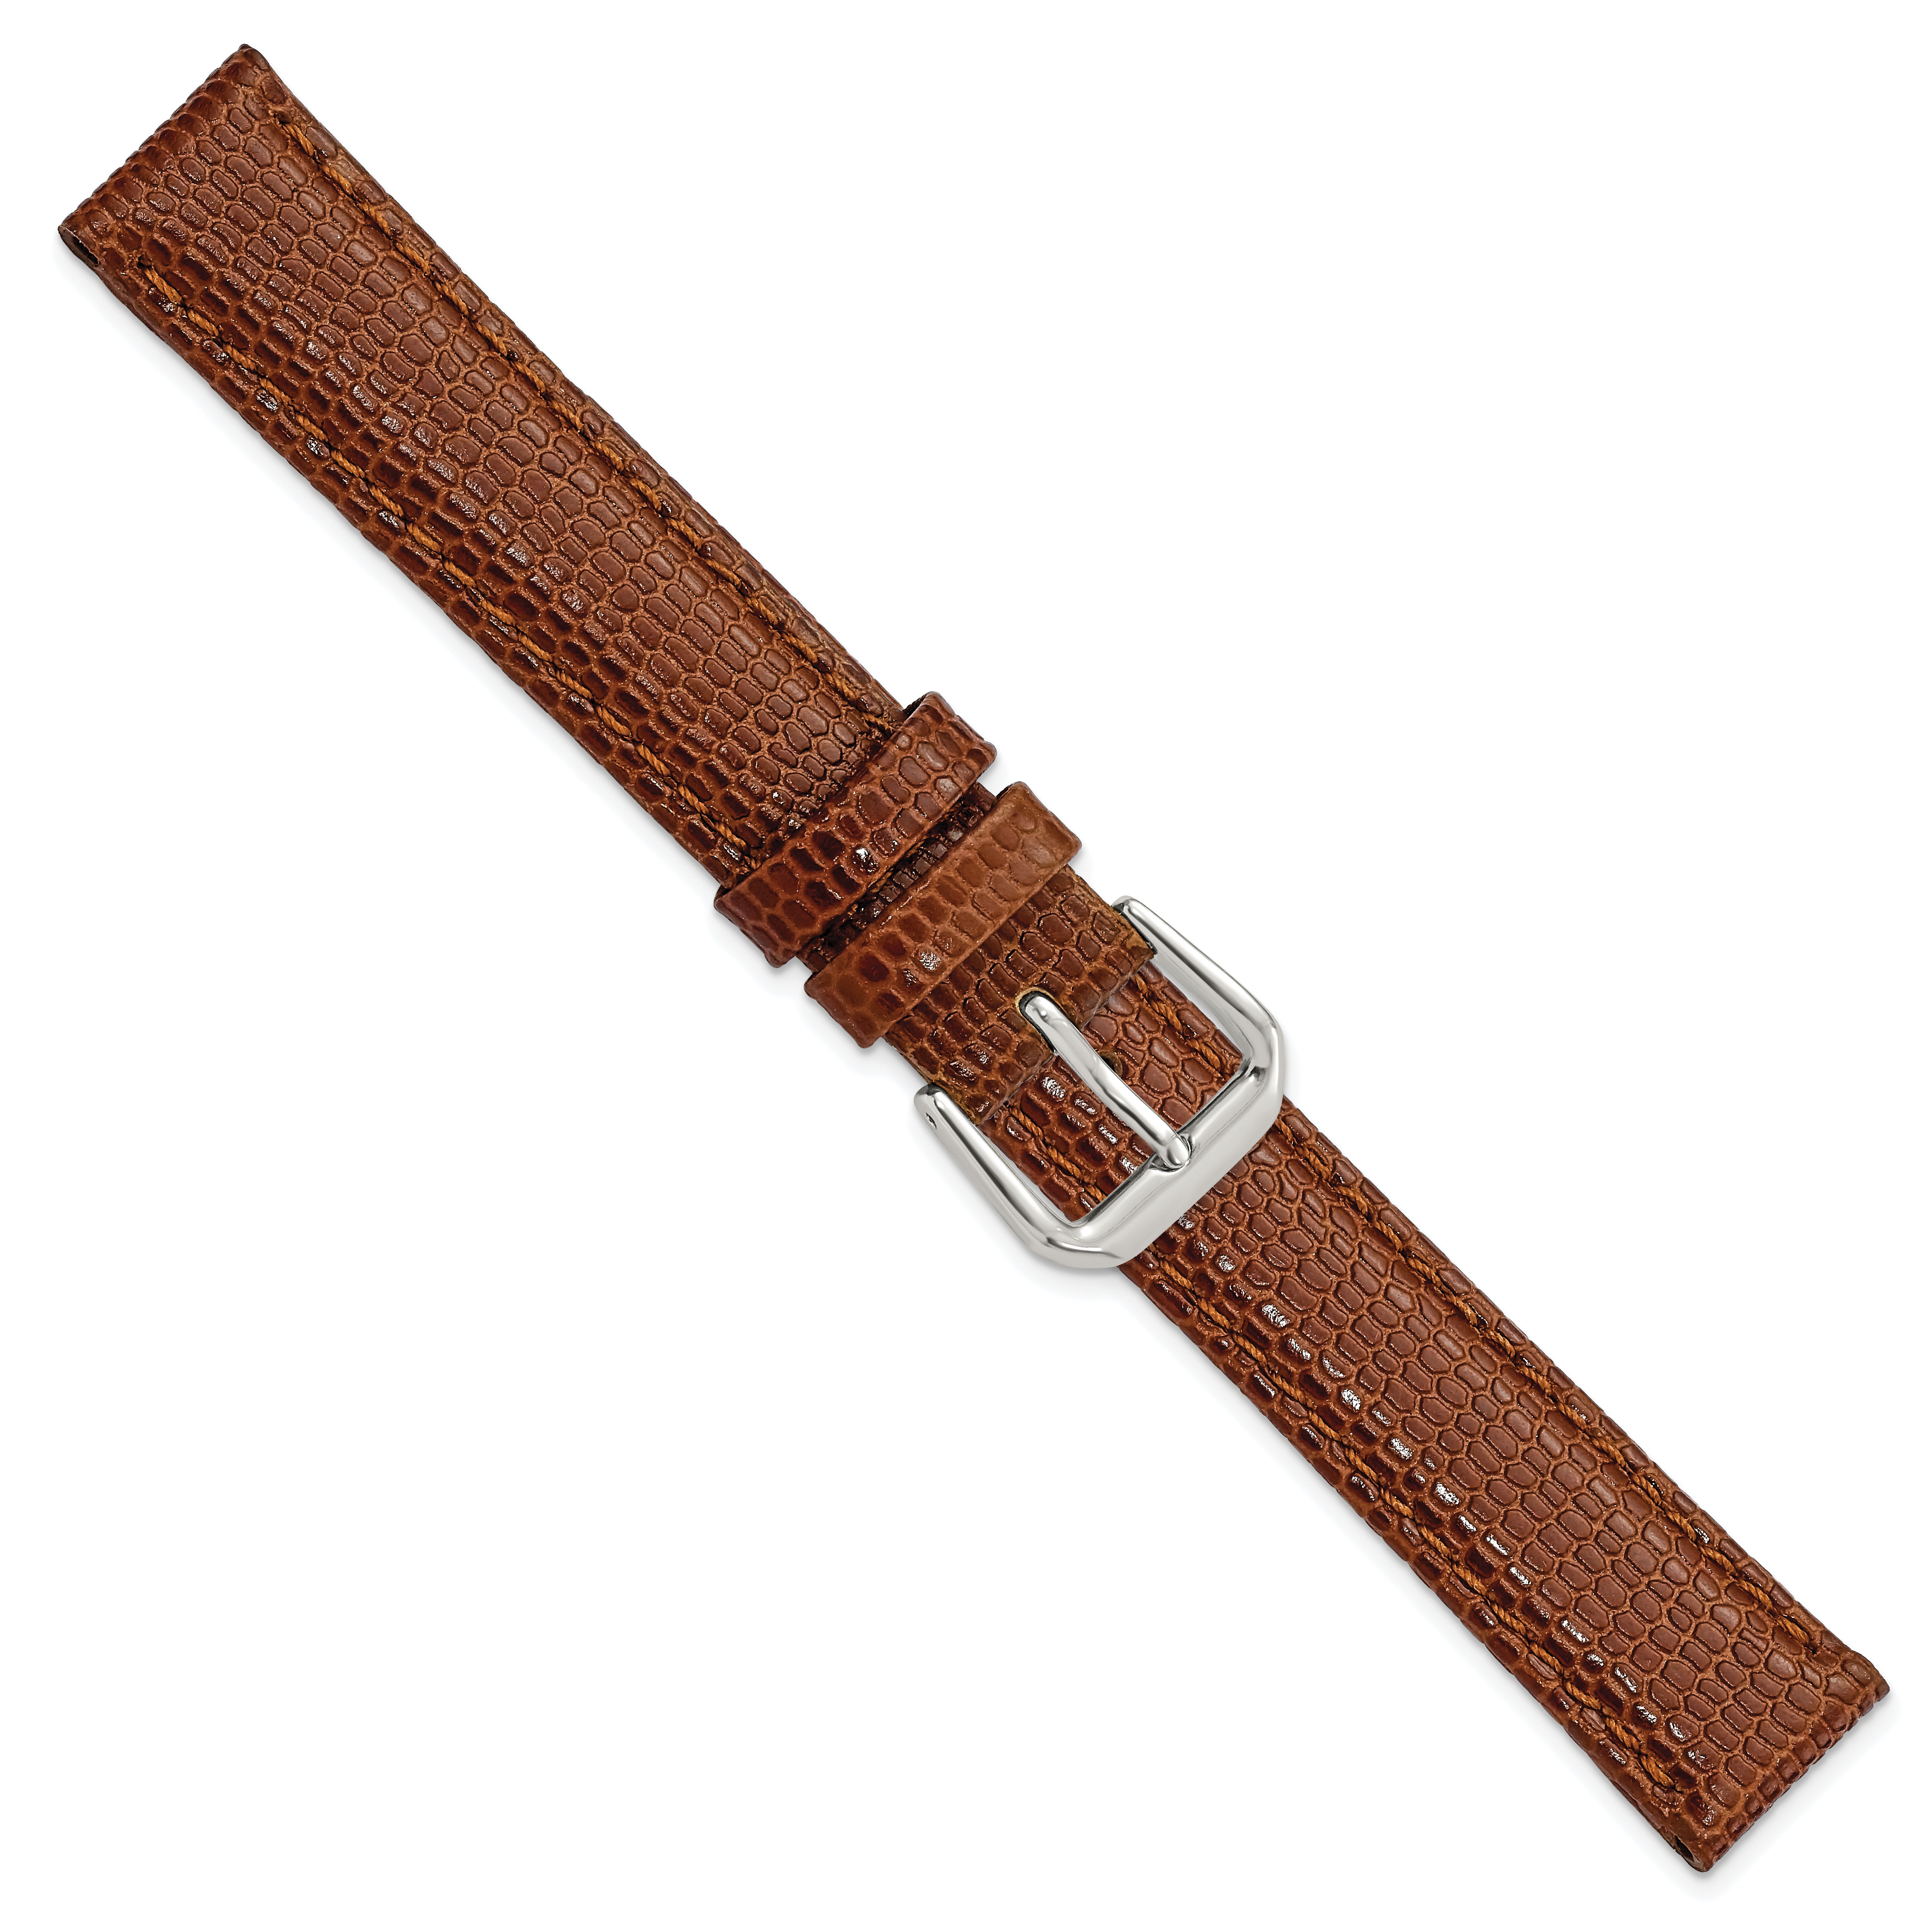 12mm Havana Lizard Grain Leather with Silver-tone Buckle 6.75 inch Watch Band